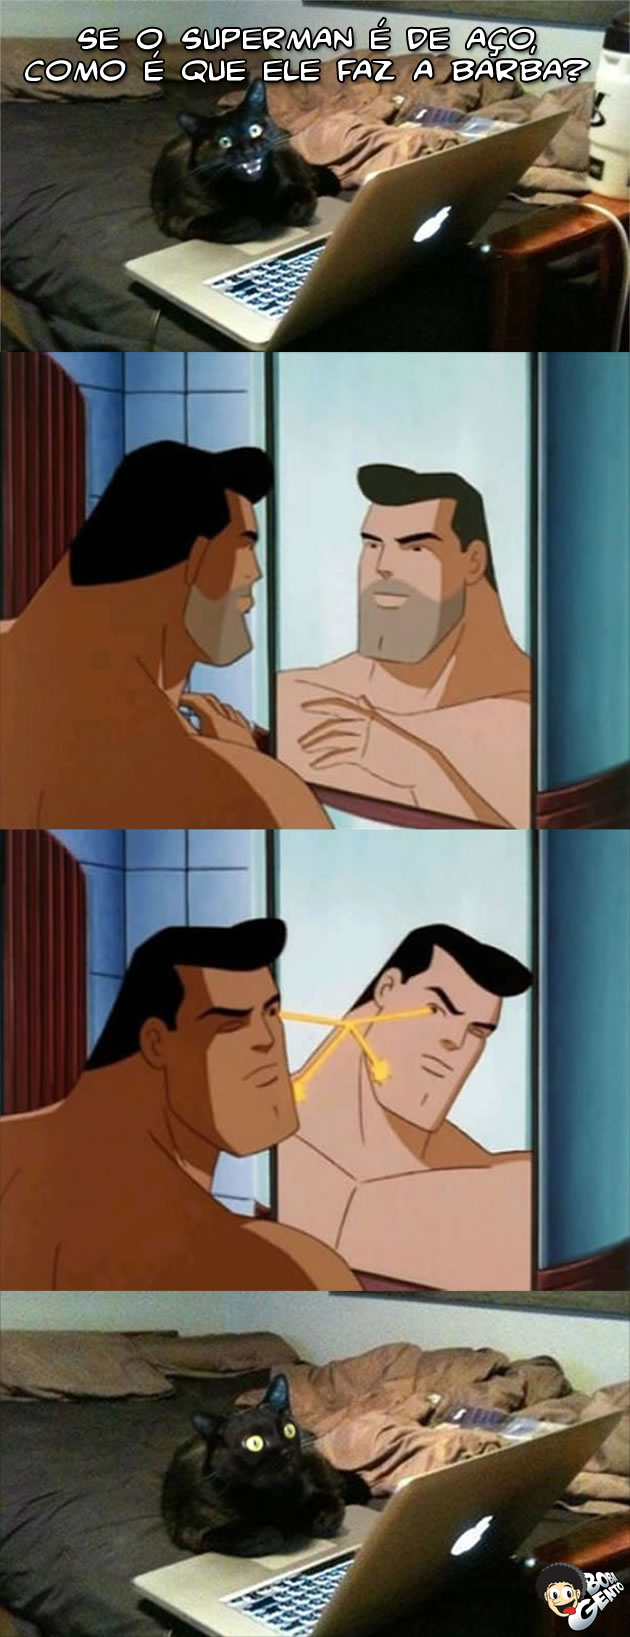 Superman fazendo a barba